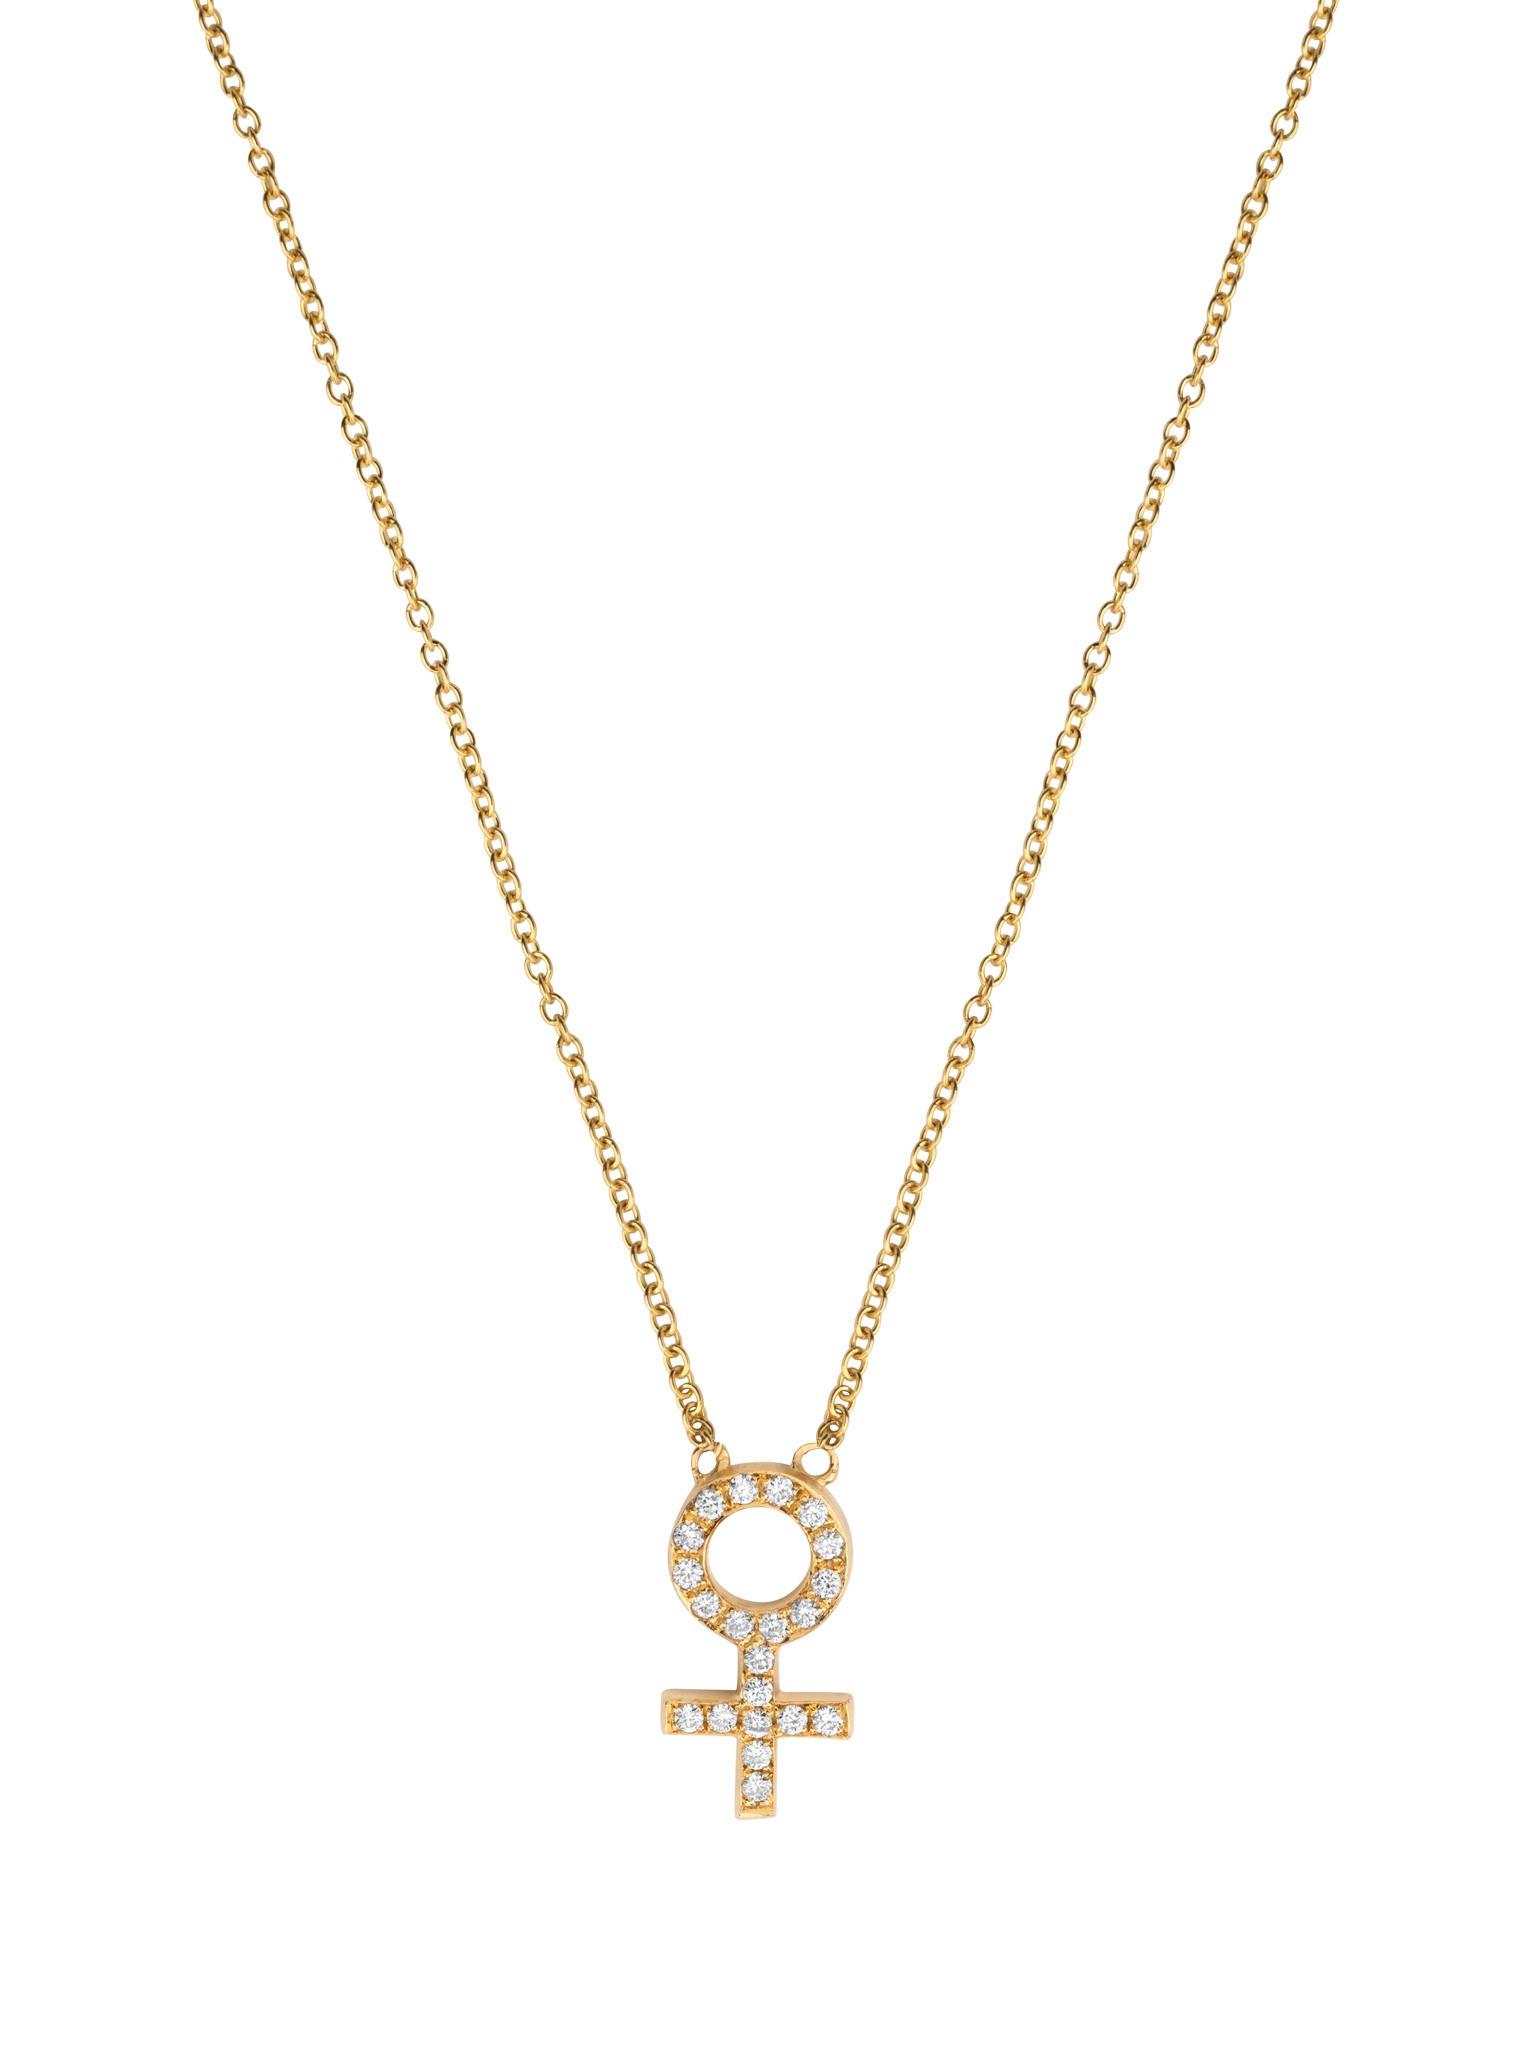 Pavé female venus symbol necklace